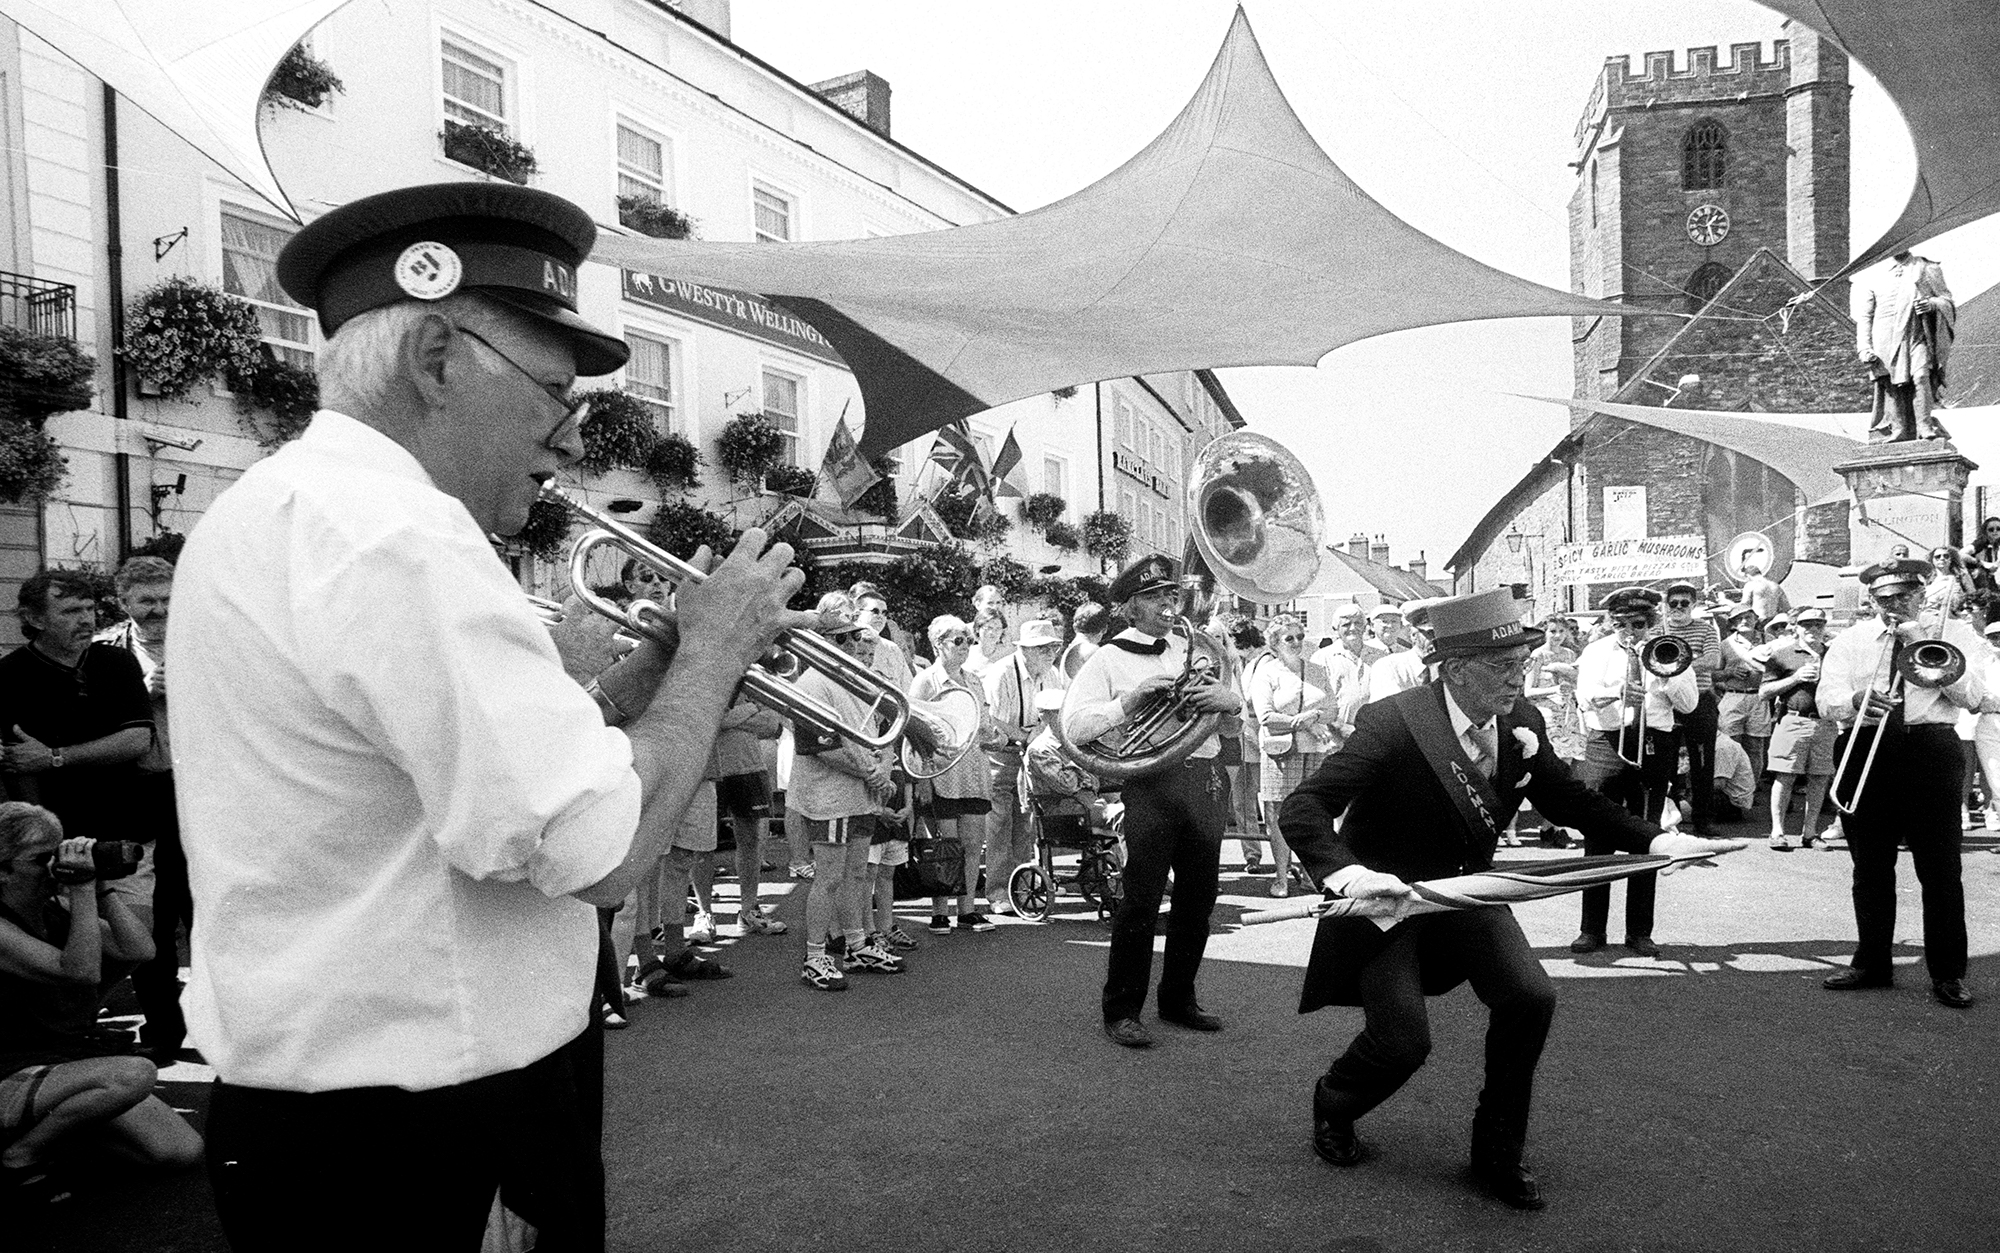 Opening of Brecon Jazz Festival - A street celebration 